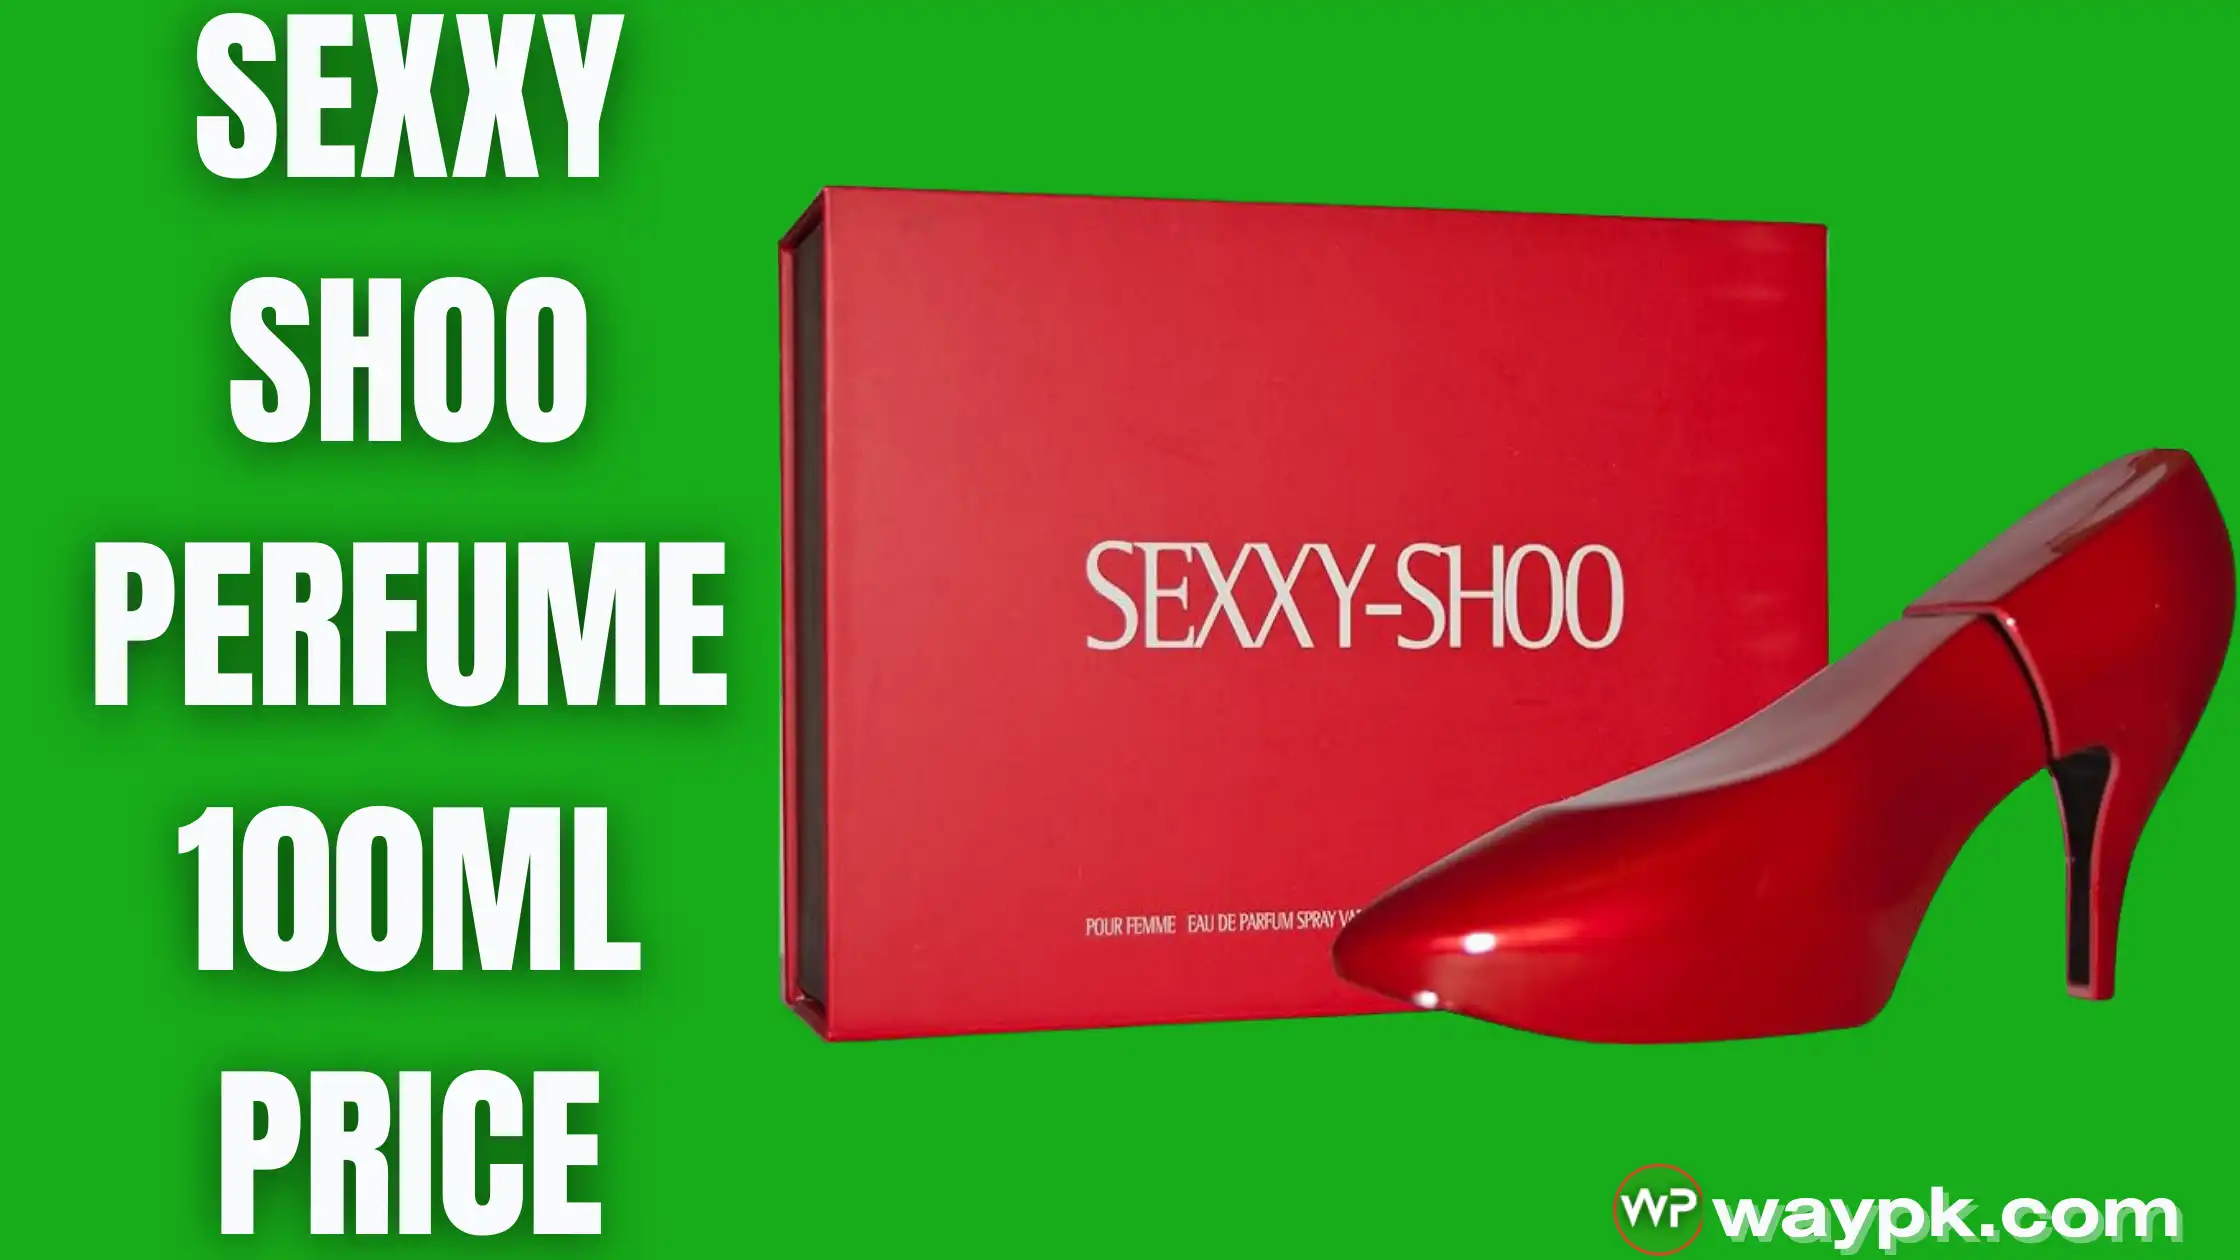 Sexxy Shoo perfume 100ml price in UK